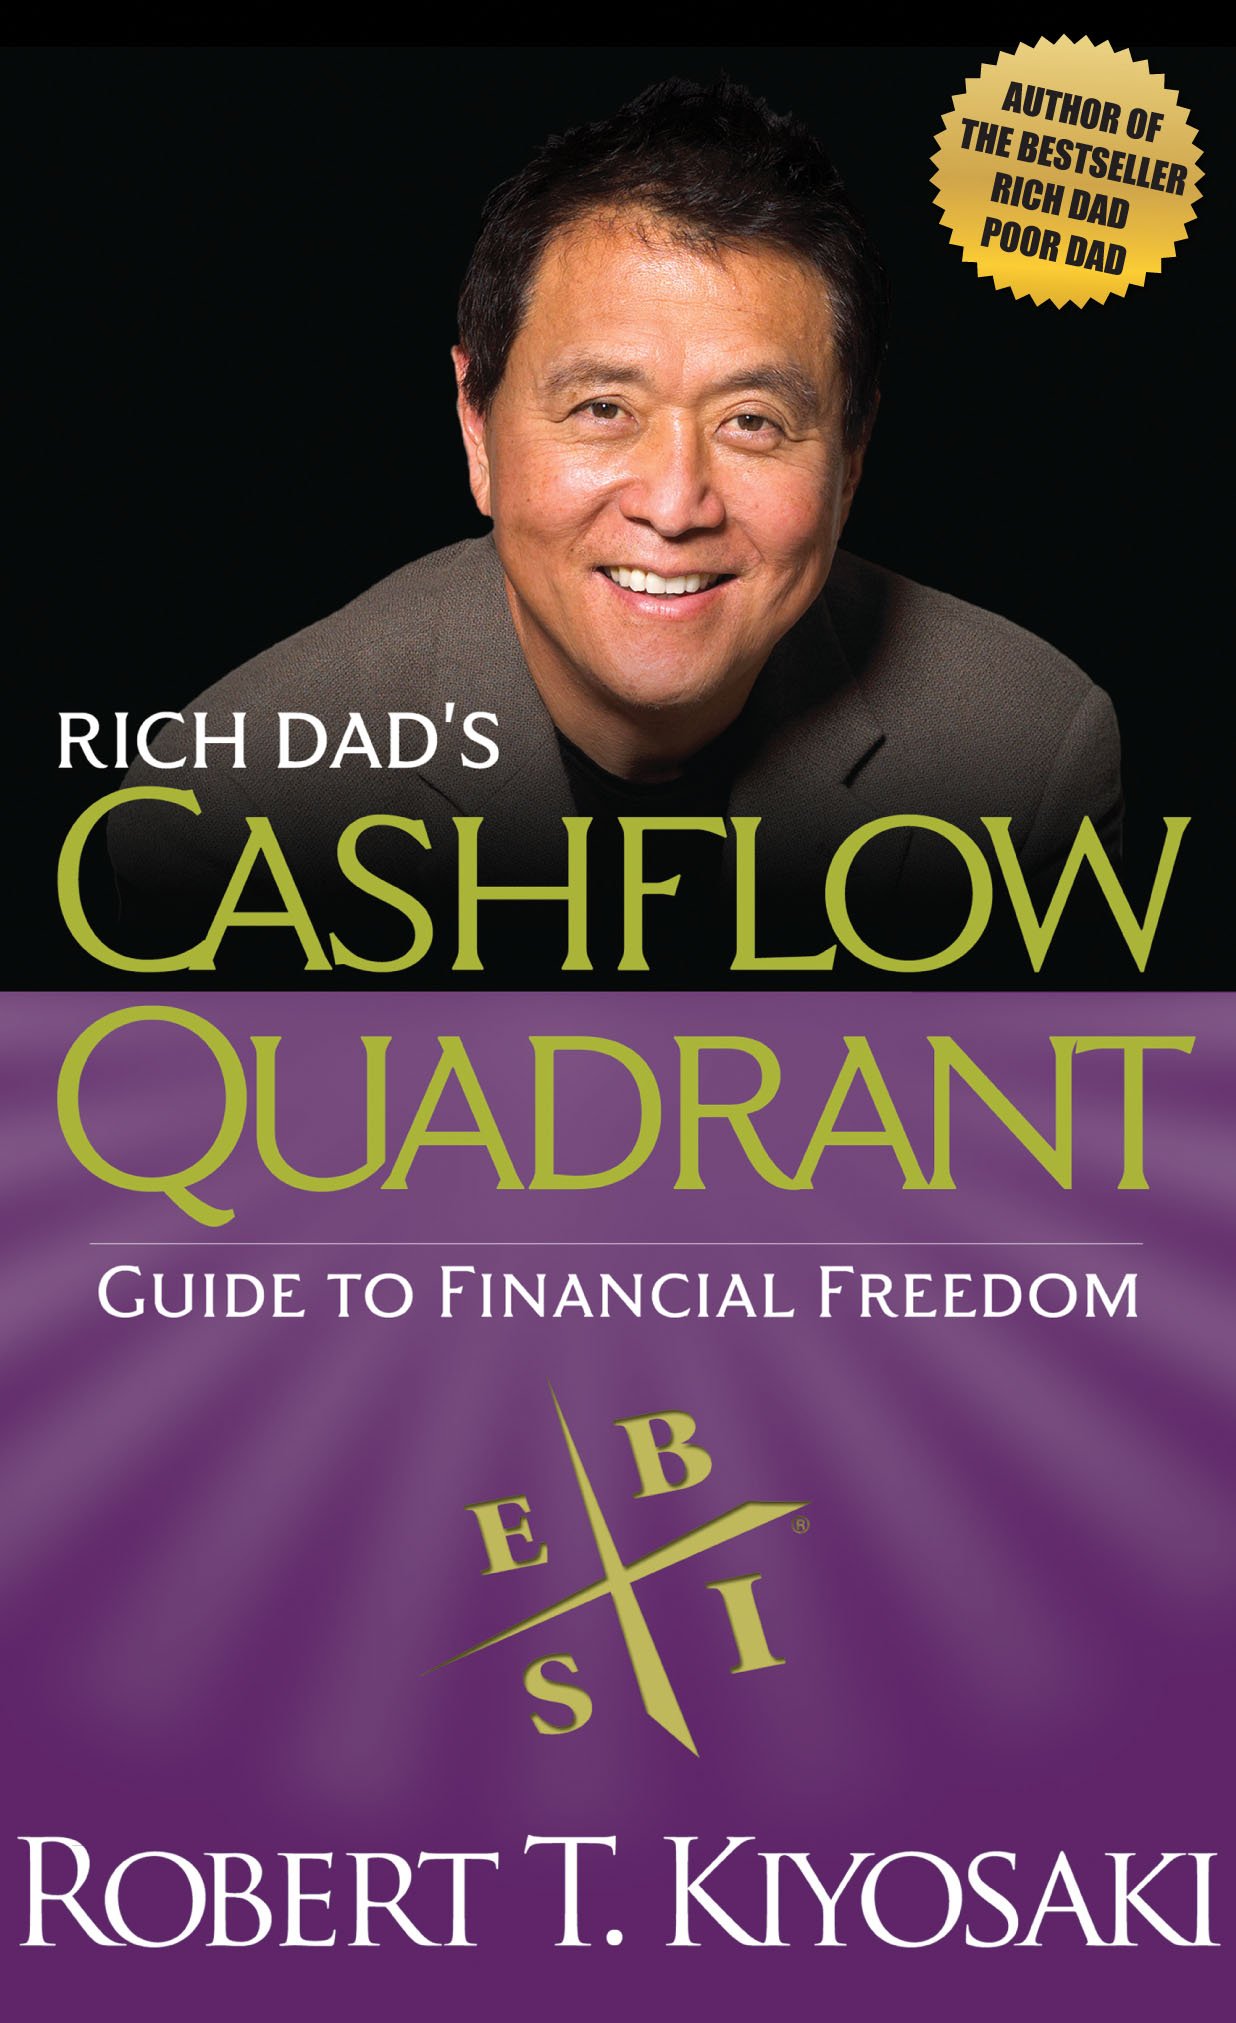 rich dad poor dad cashflow quadrant